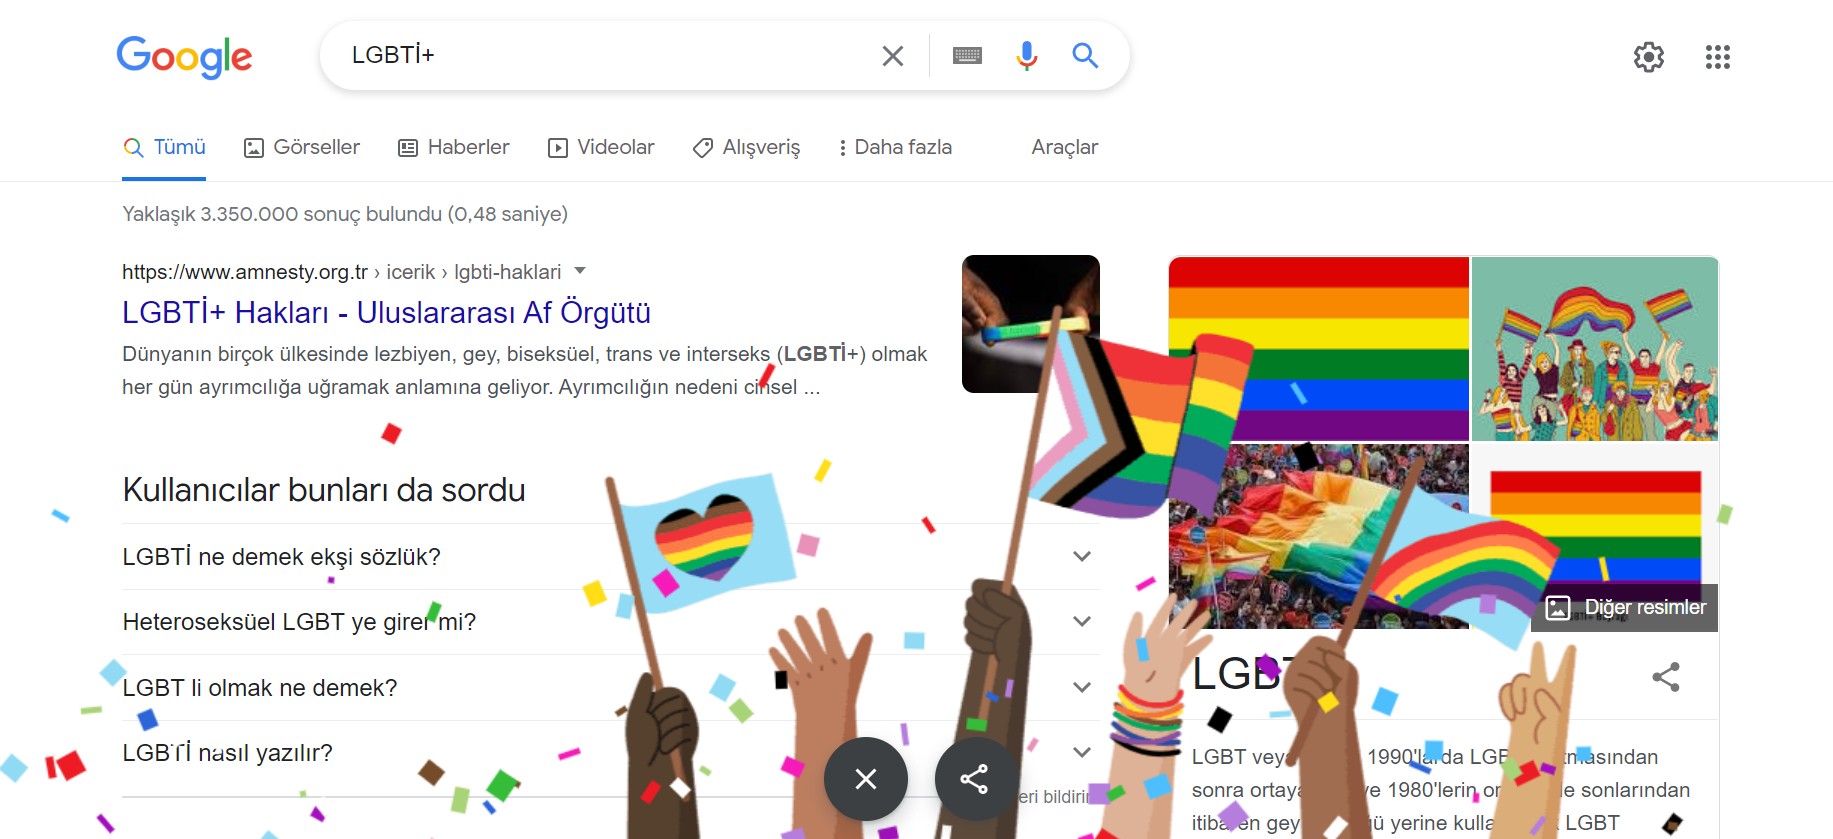 Google’a Pride geldi Kaos GL - LGBTİ+ Haber Portalı